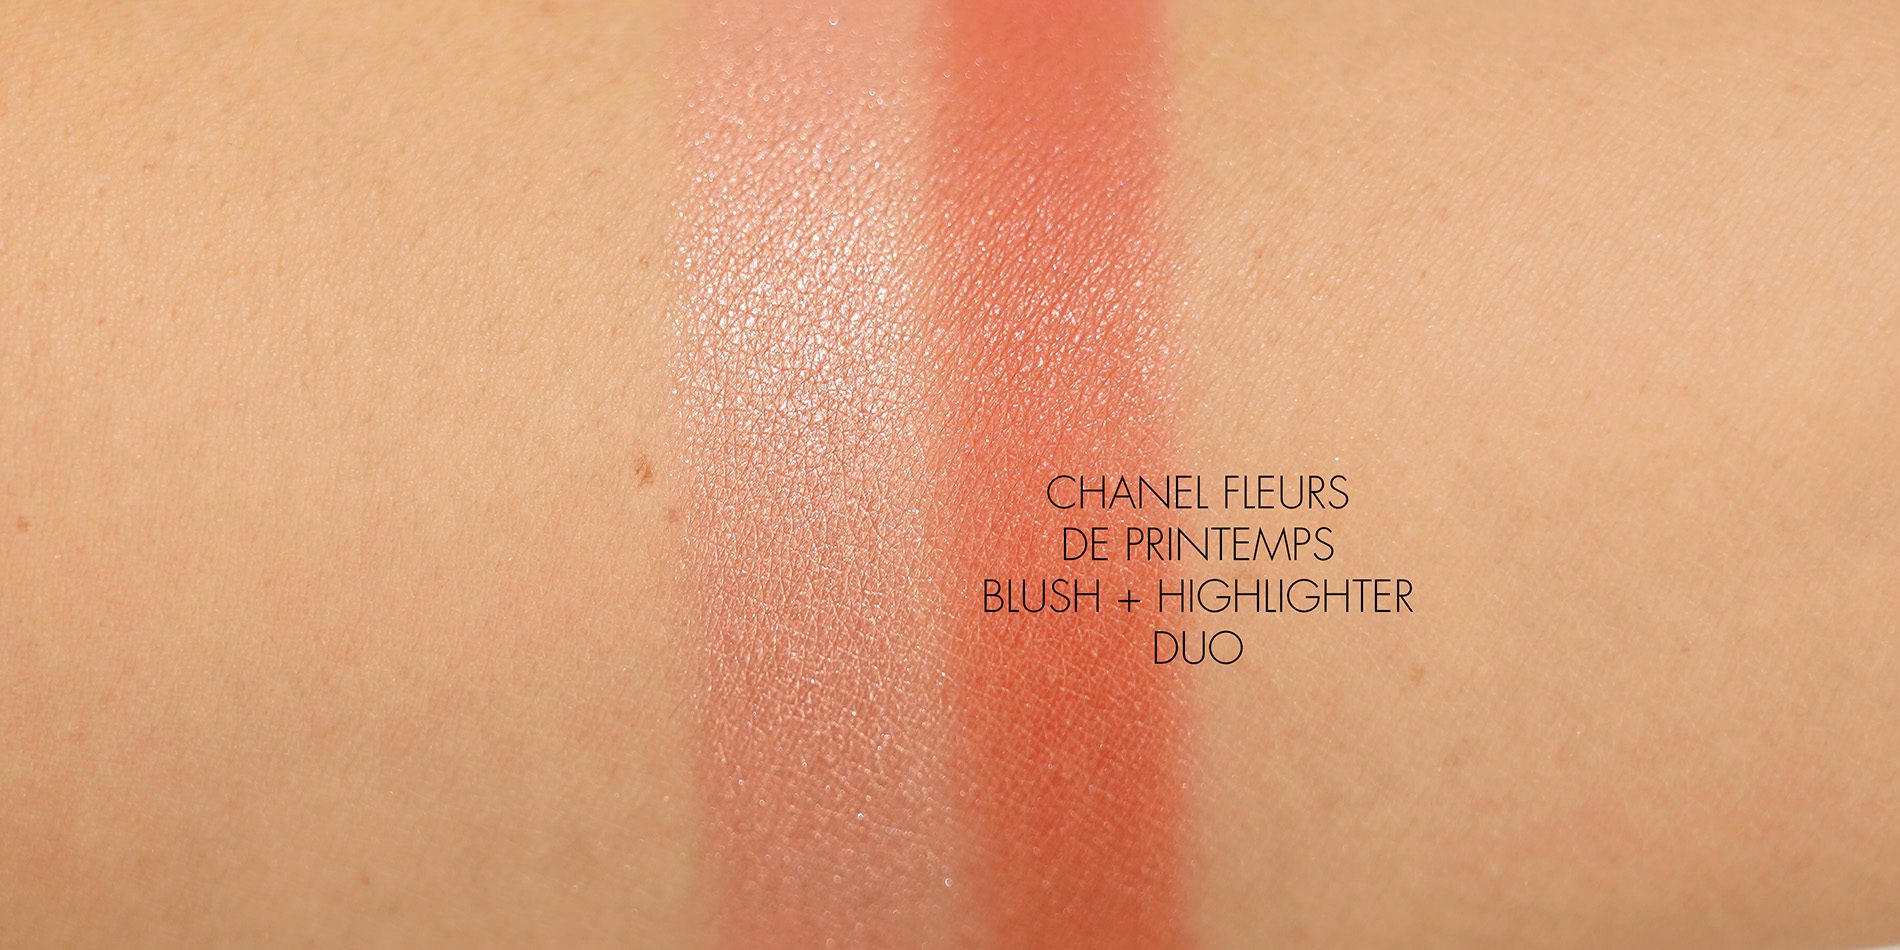 CHANEL LES BEIGES HEALTHY GLOW Sheer Color Stick Blush